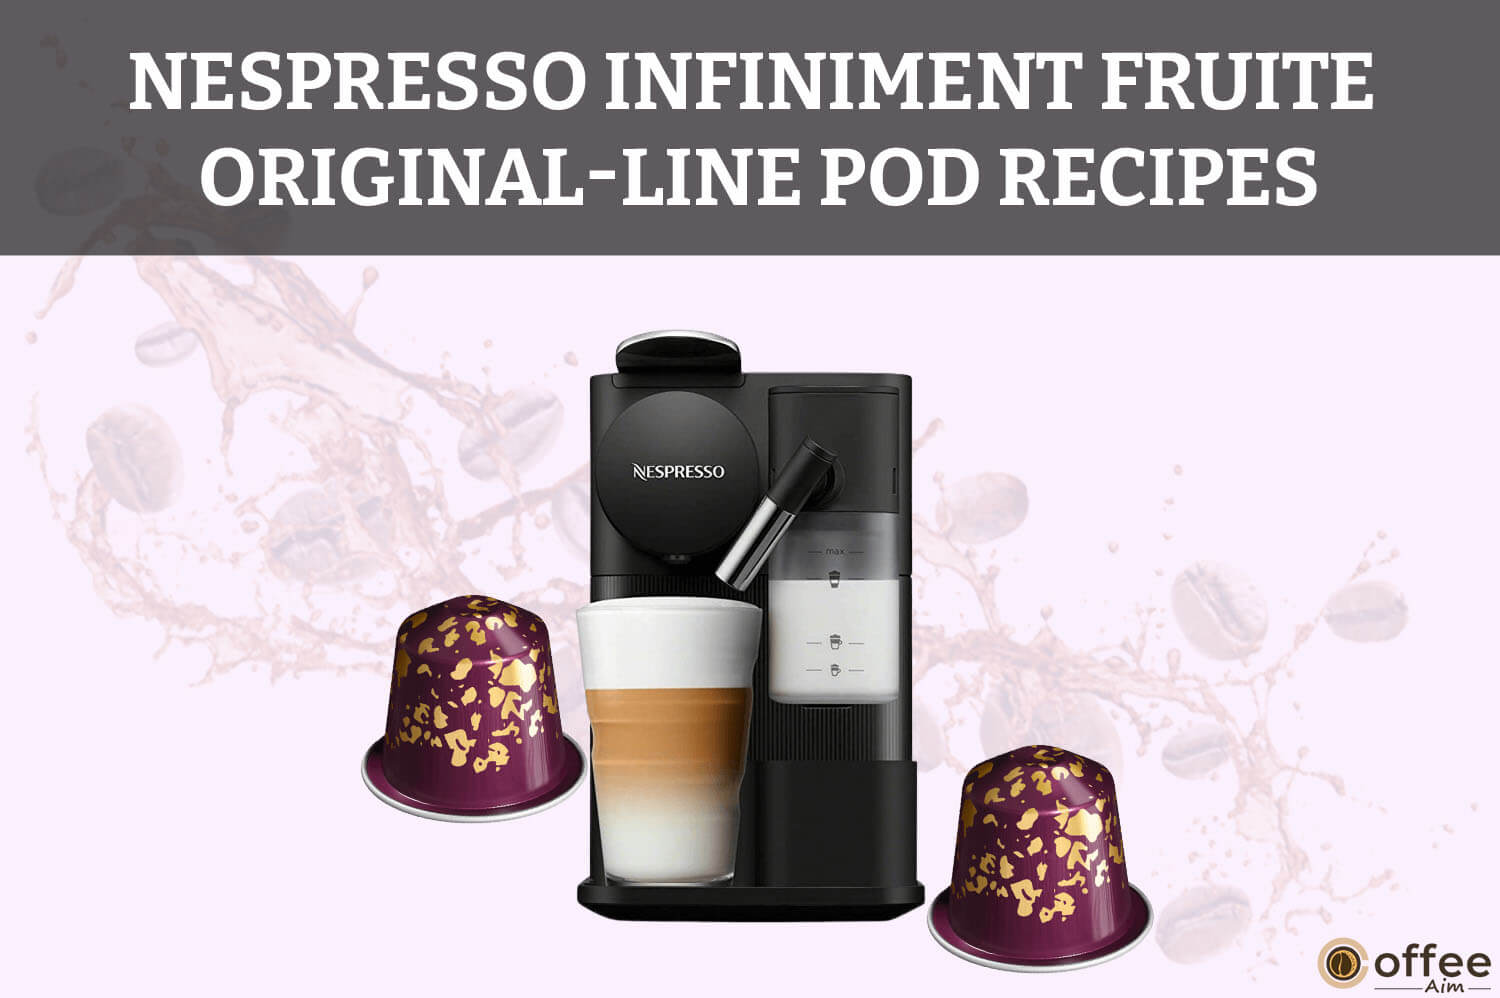 Featured image for the article "Nespresso OriginalLine Infiniment Fruite Pod Recipes"